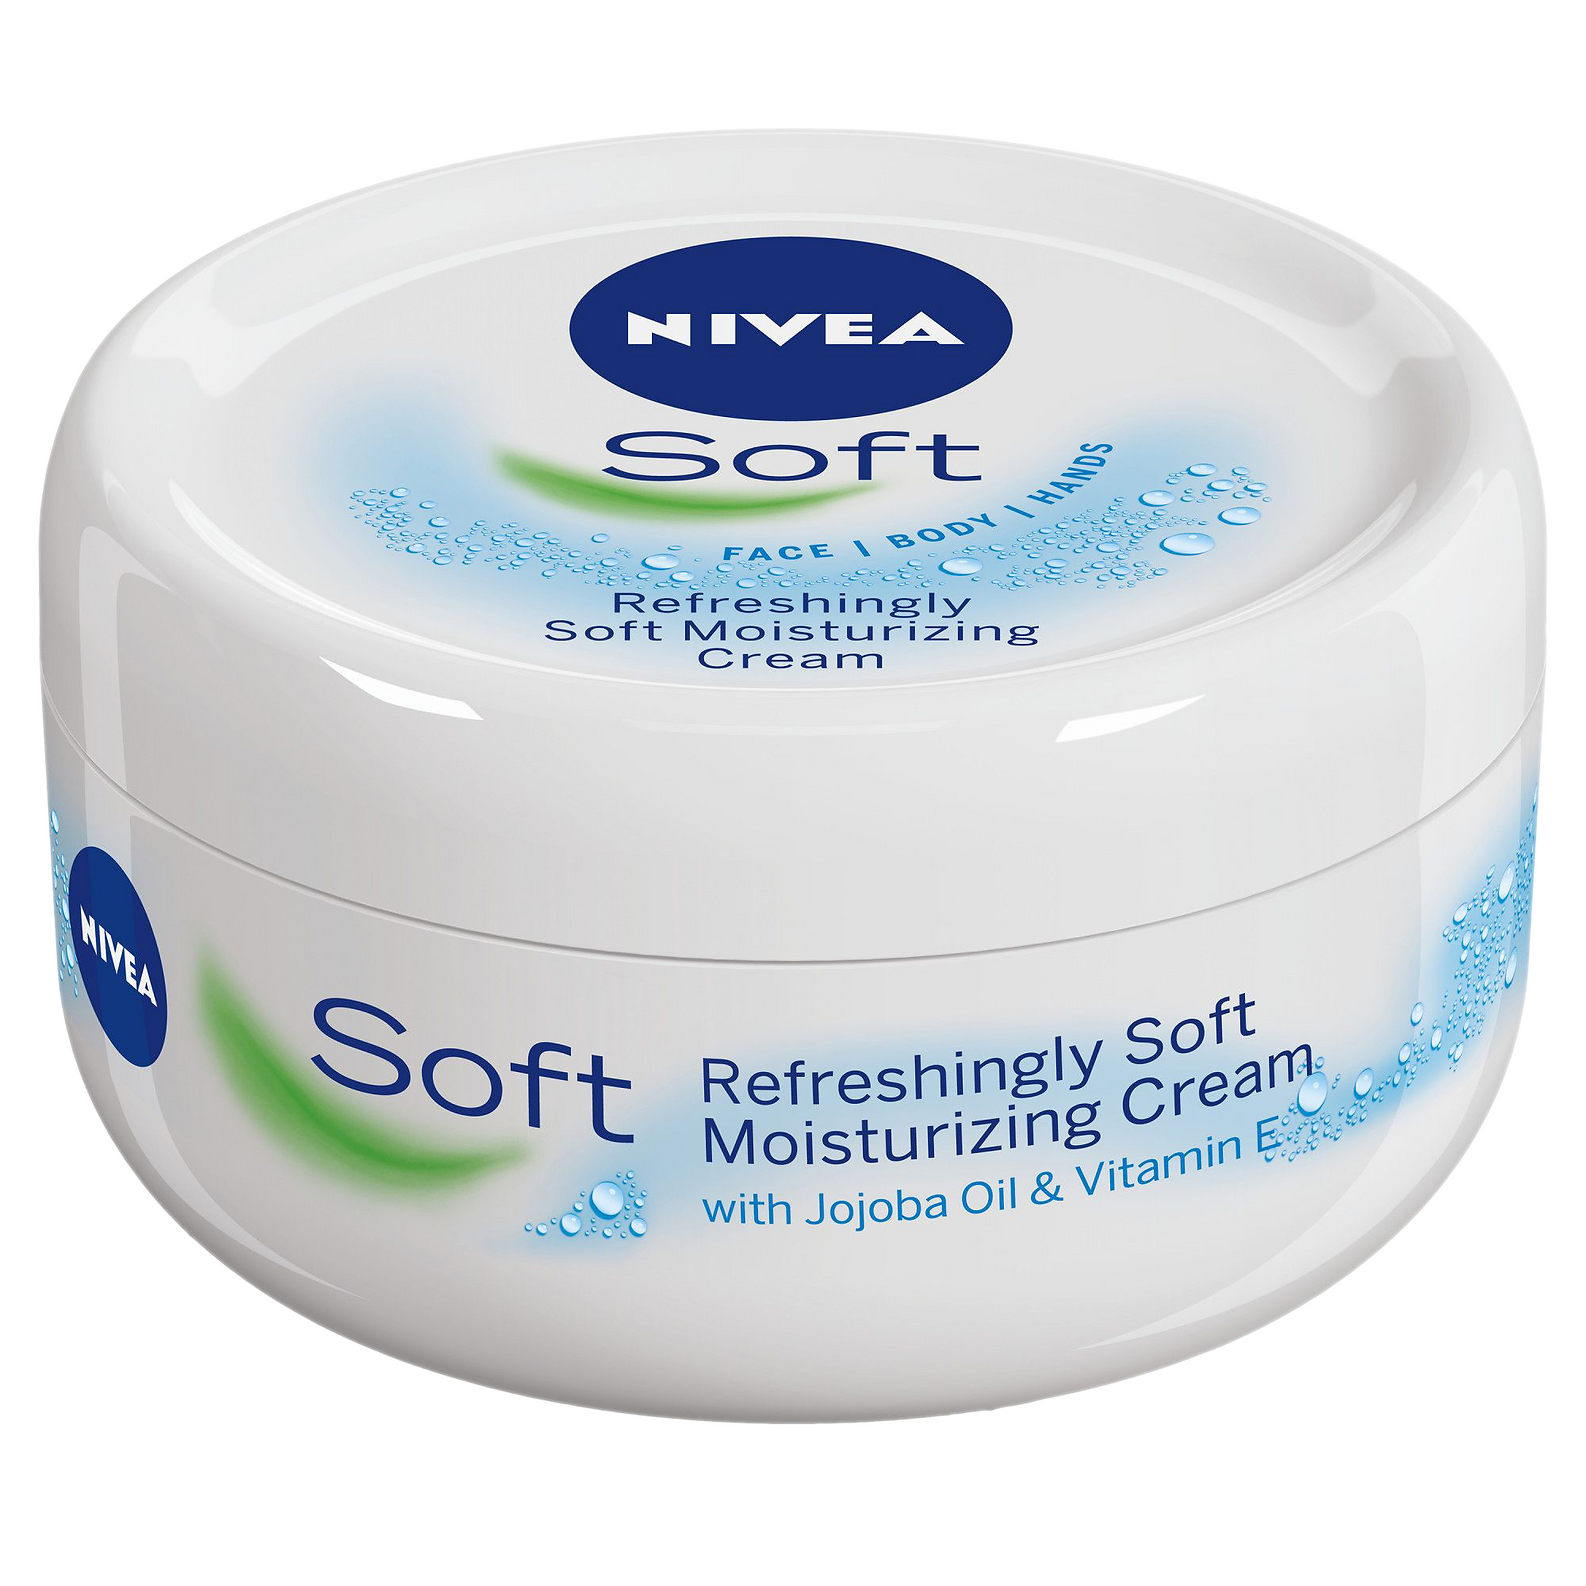 Nivea Soft Refreshingly Soft Moisturizing Cream 300 ml oz) | PDL Pharmacy